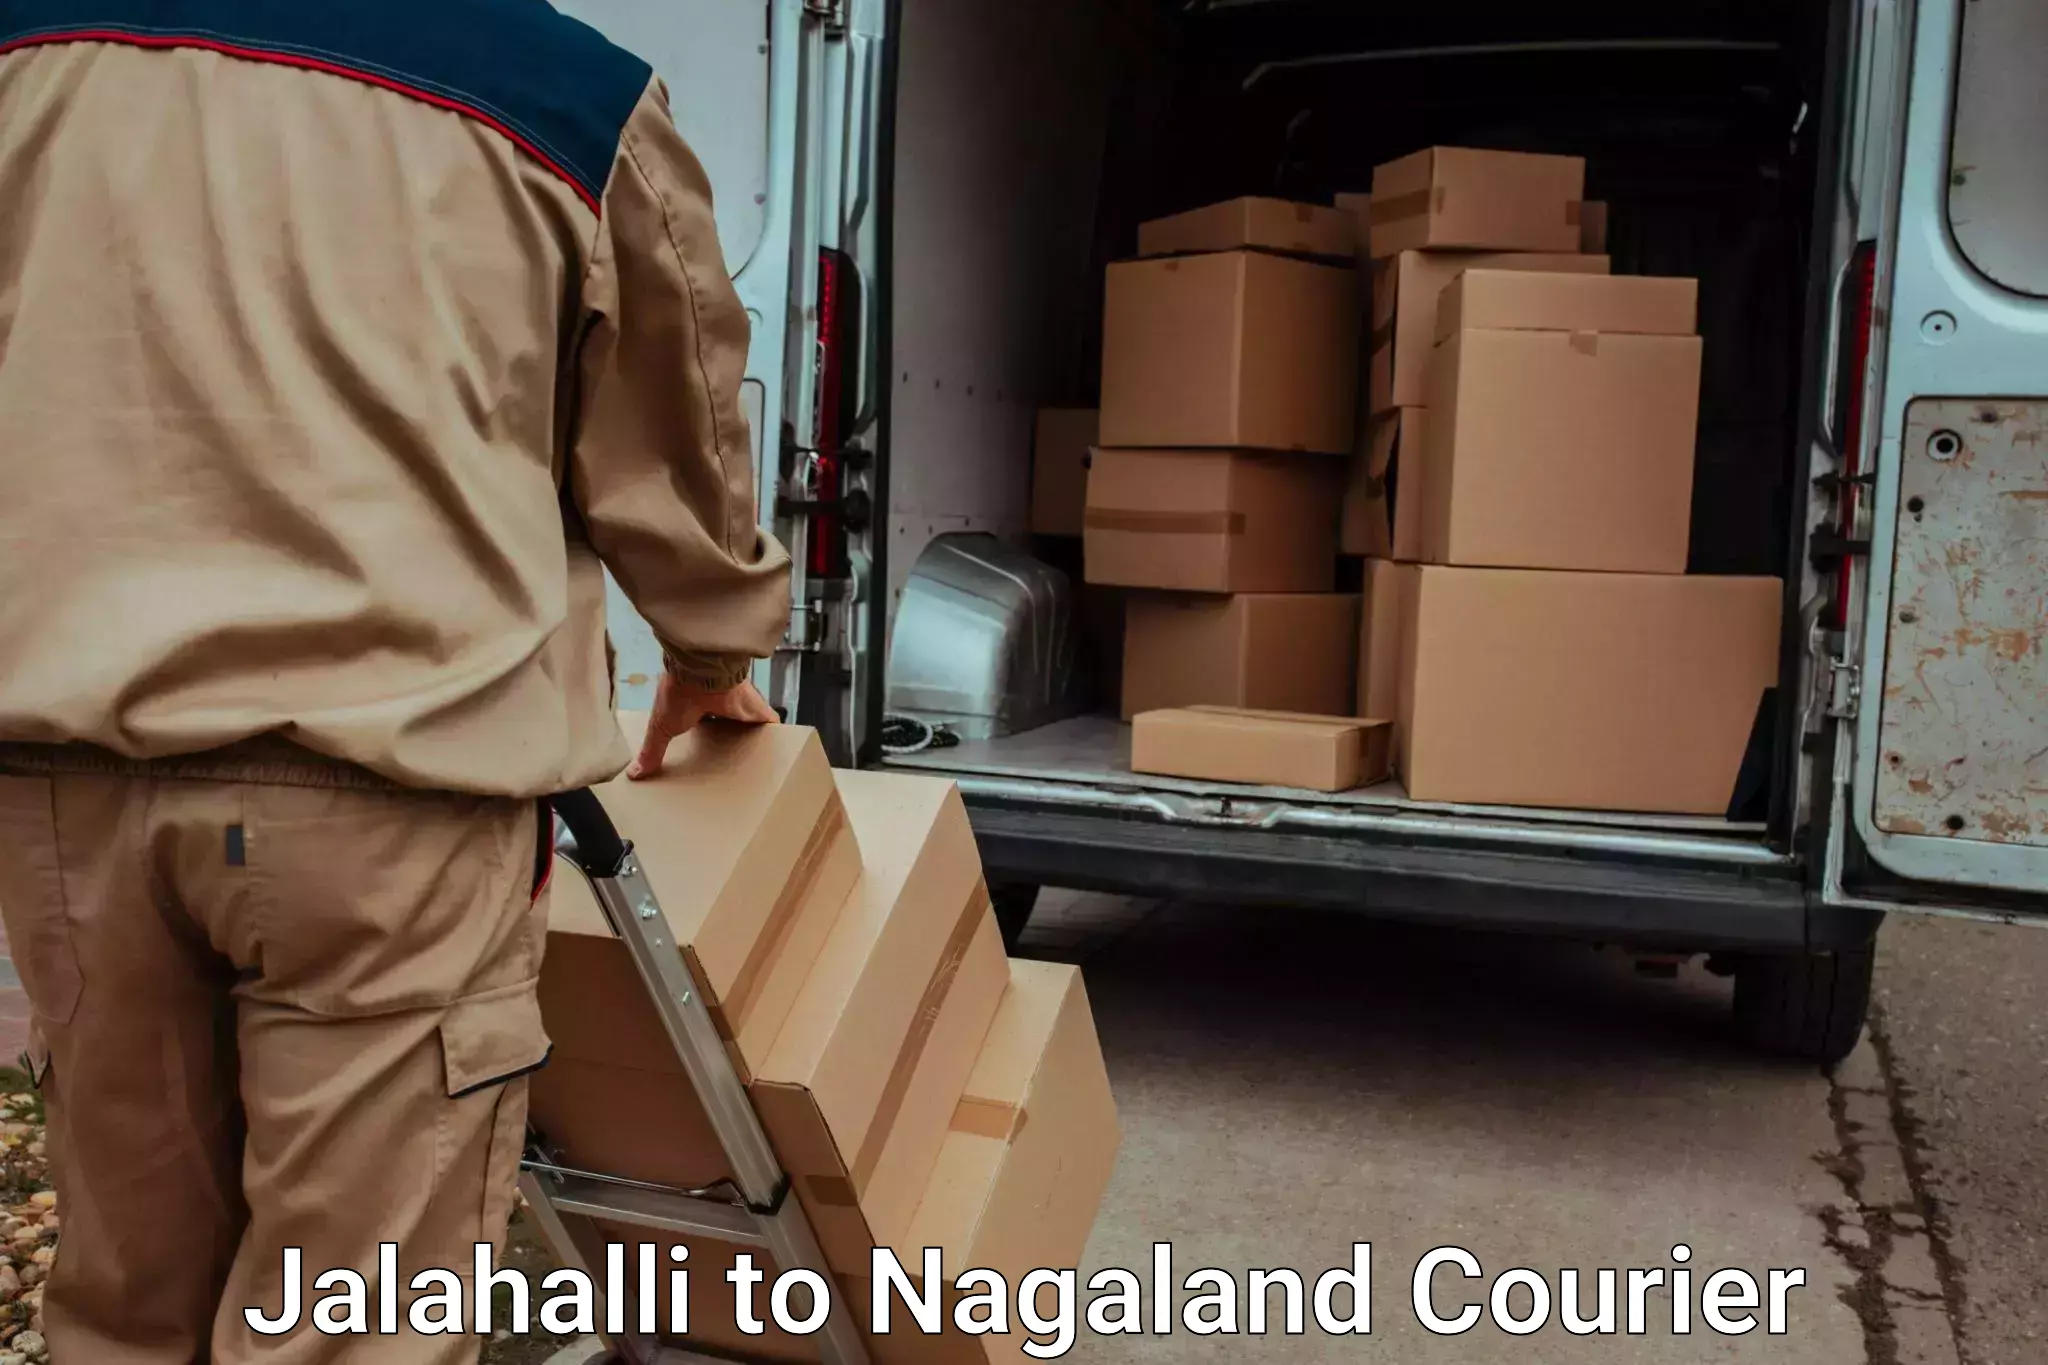 Furniture delivery service Jalahalli to Nagaland